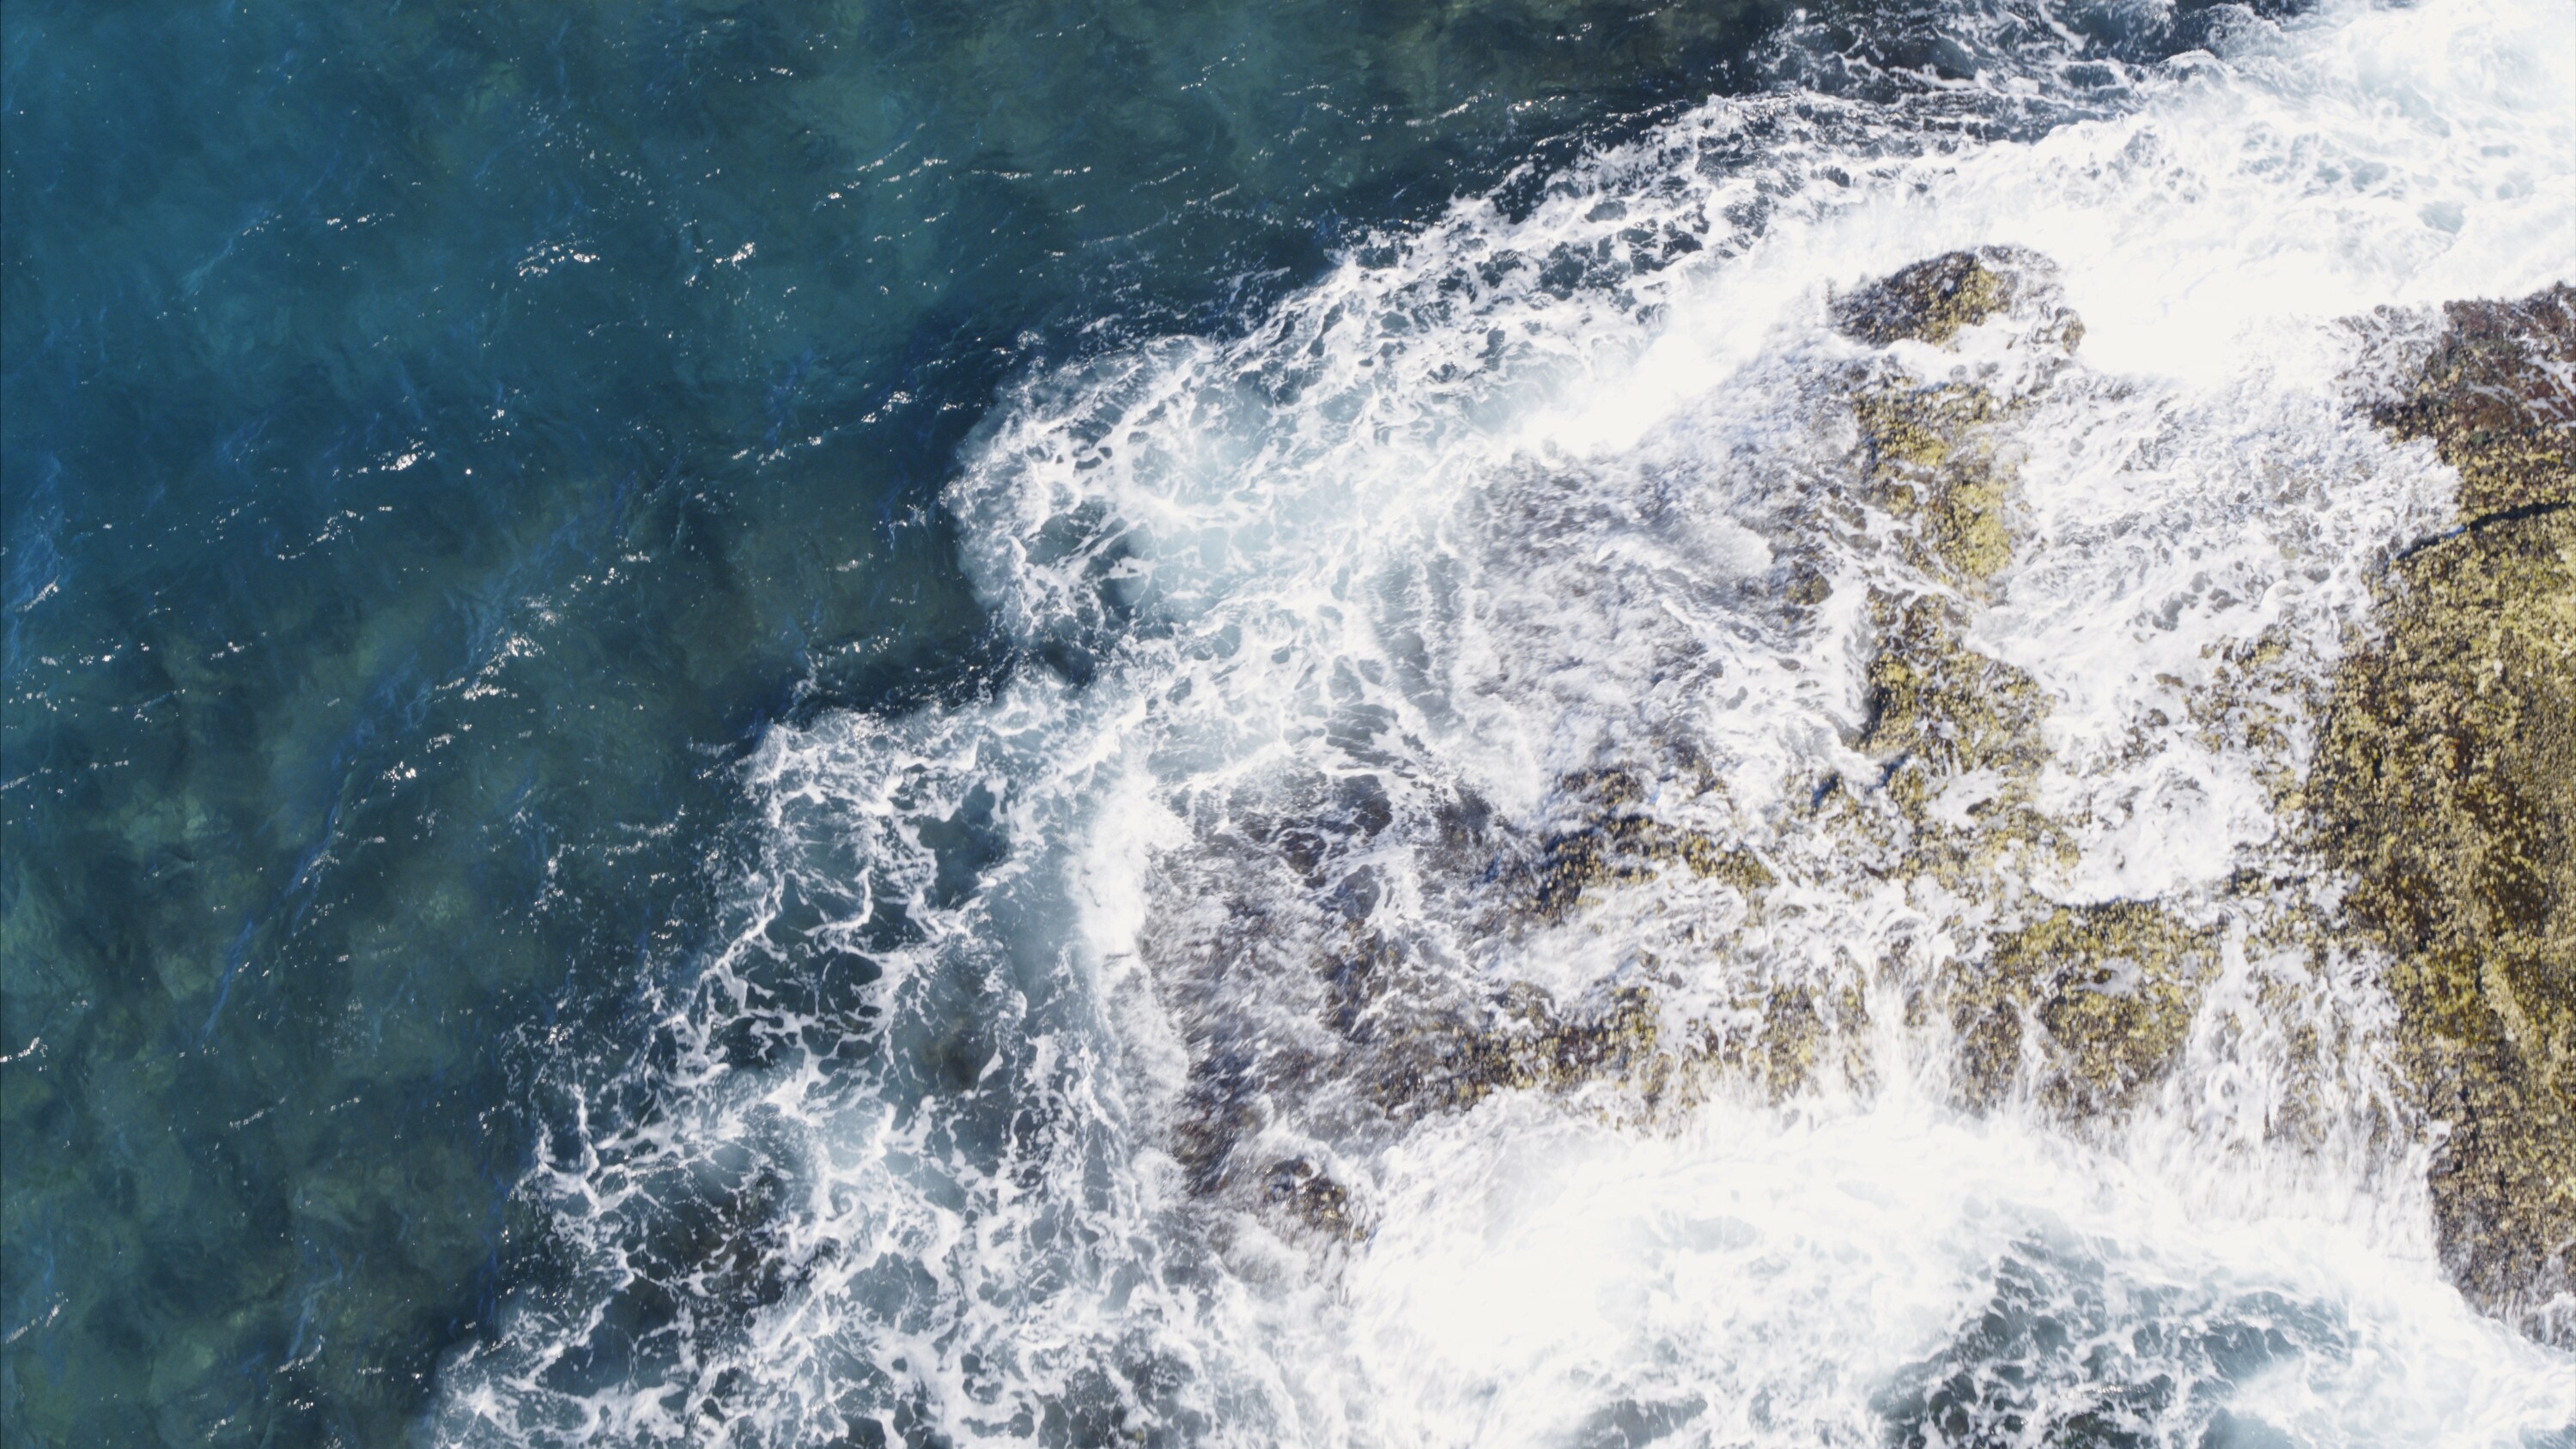 Waves crash on the rocks off of North Stradbroke Island. (National Geographic for Disney+)